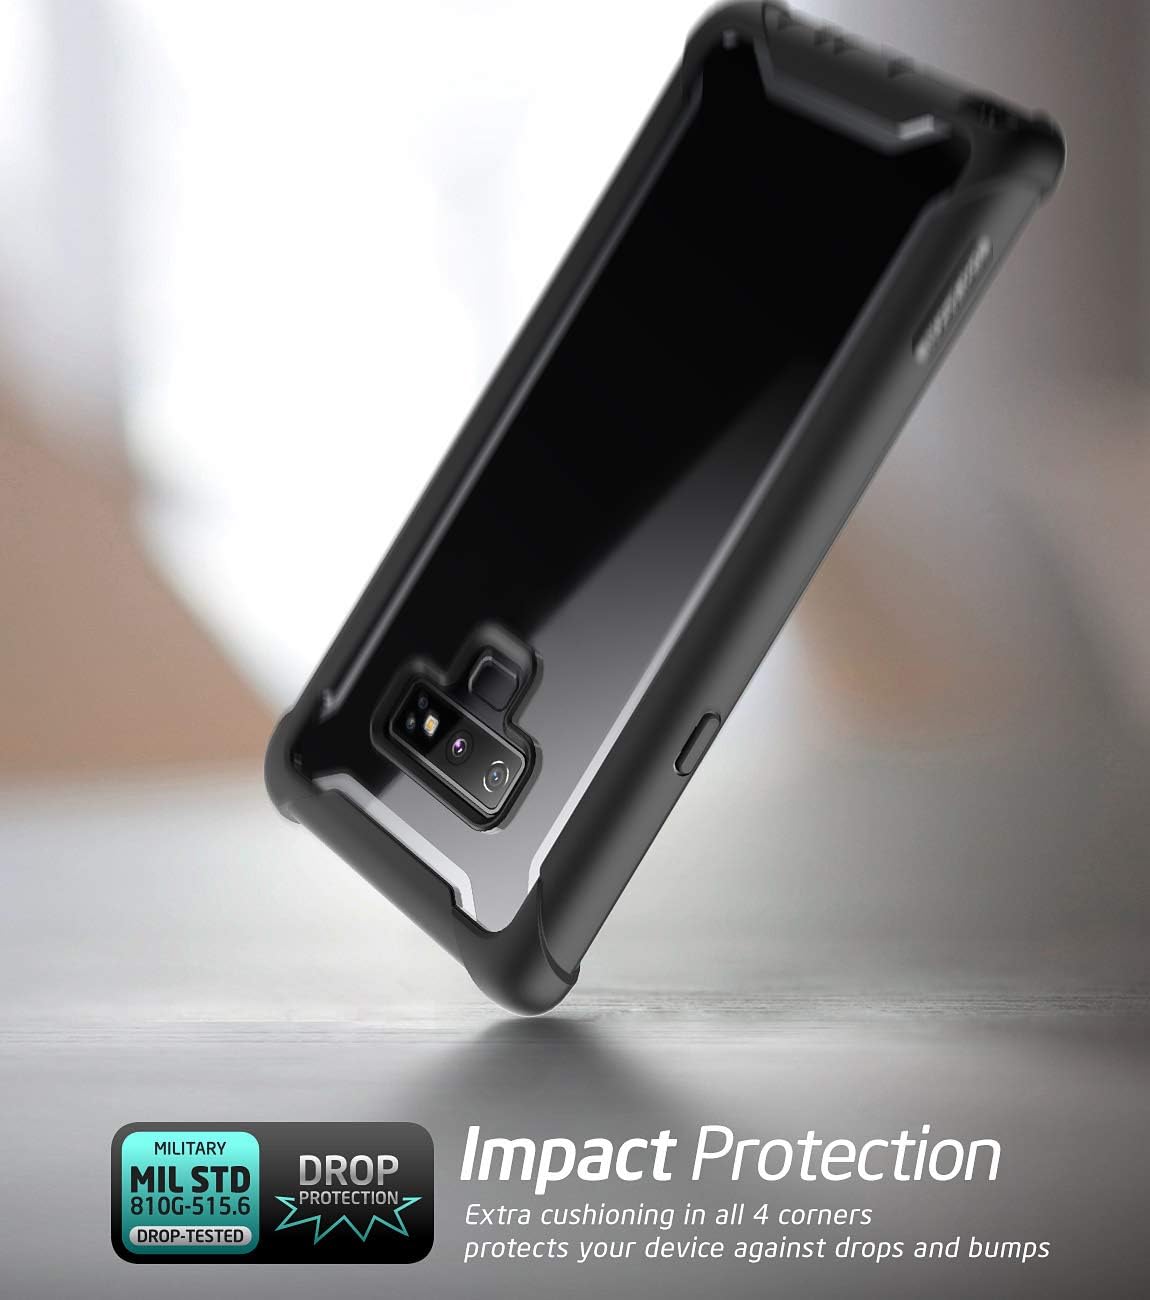 Galaxy Note 9 ケース [ SC-01L SCV40 ] 対応 液晶内置フィルム付き 全面保護 背面クリアカバ- [Ares Series]